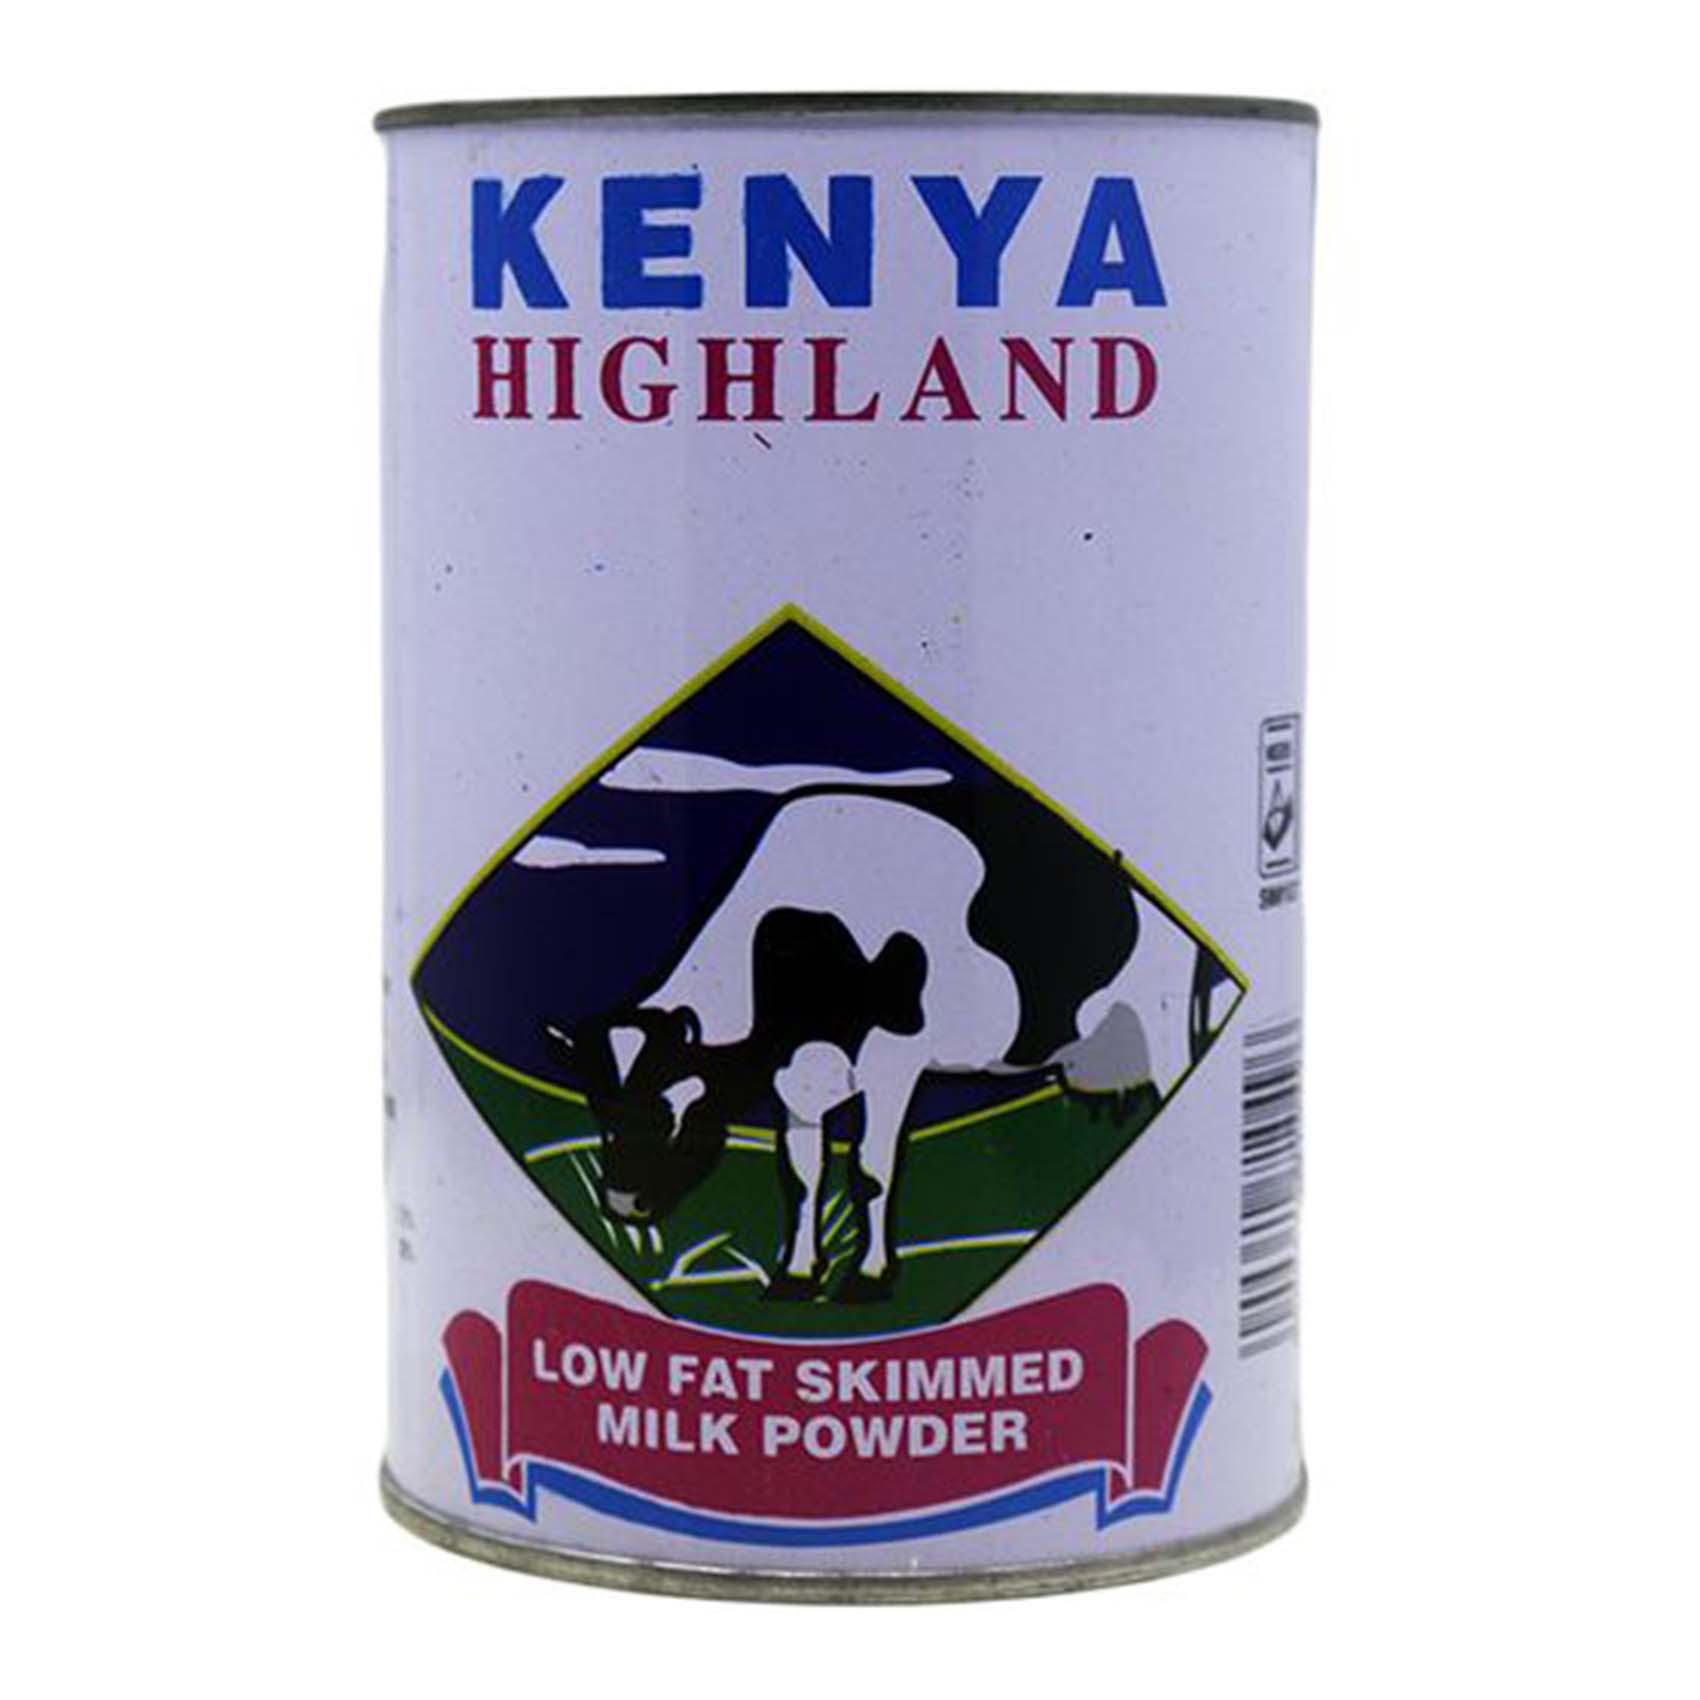 Kenya Highland Low Fat Skimmed Milk Powder 500g